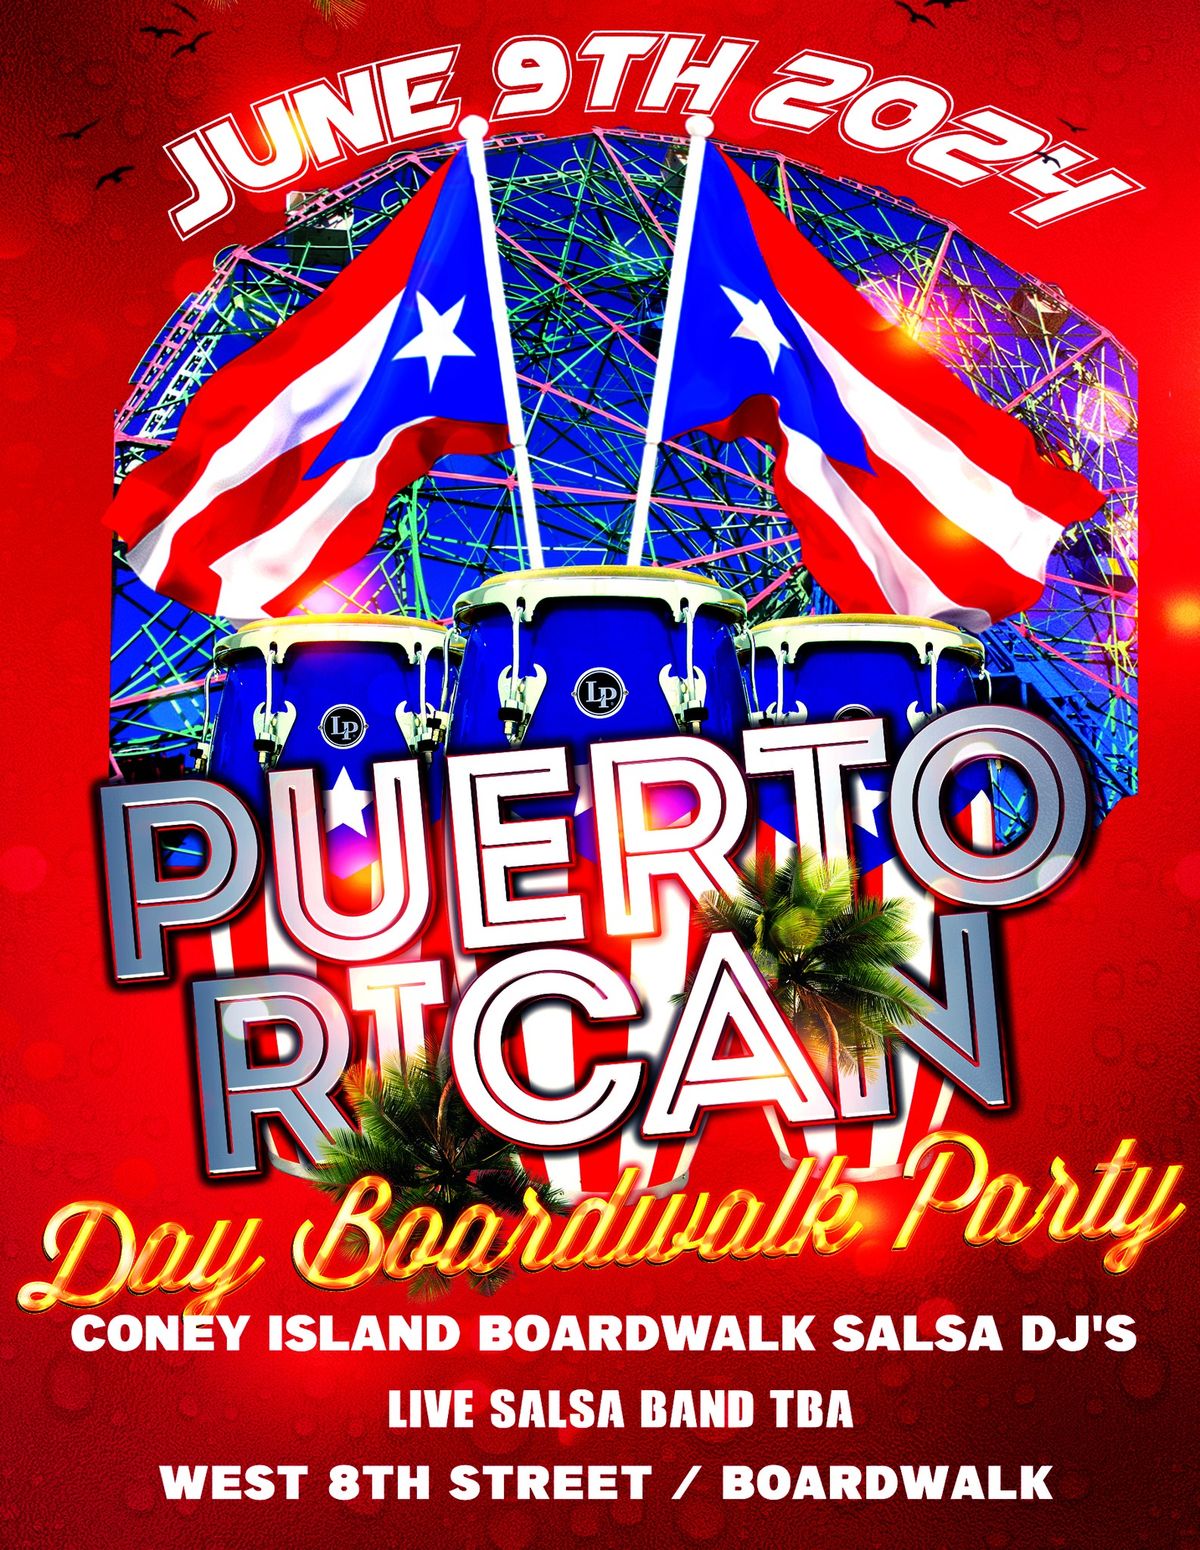 PUERTO RICAN DAY BOARDWALK PARTY with the CONEY ISLAND BOARDWALK SALSA DJ's